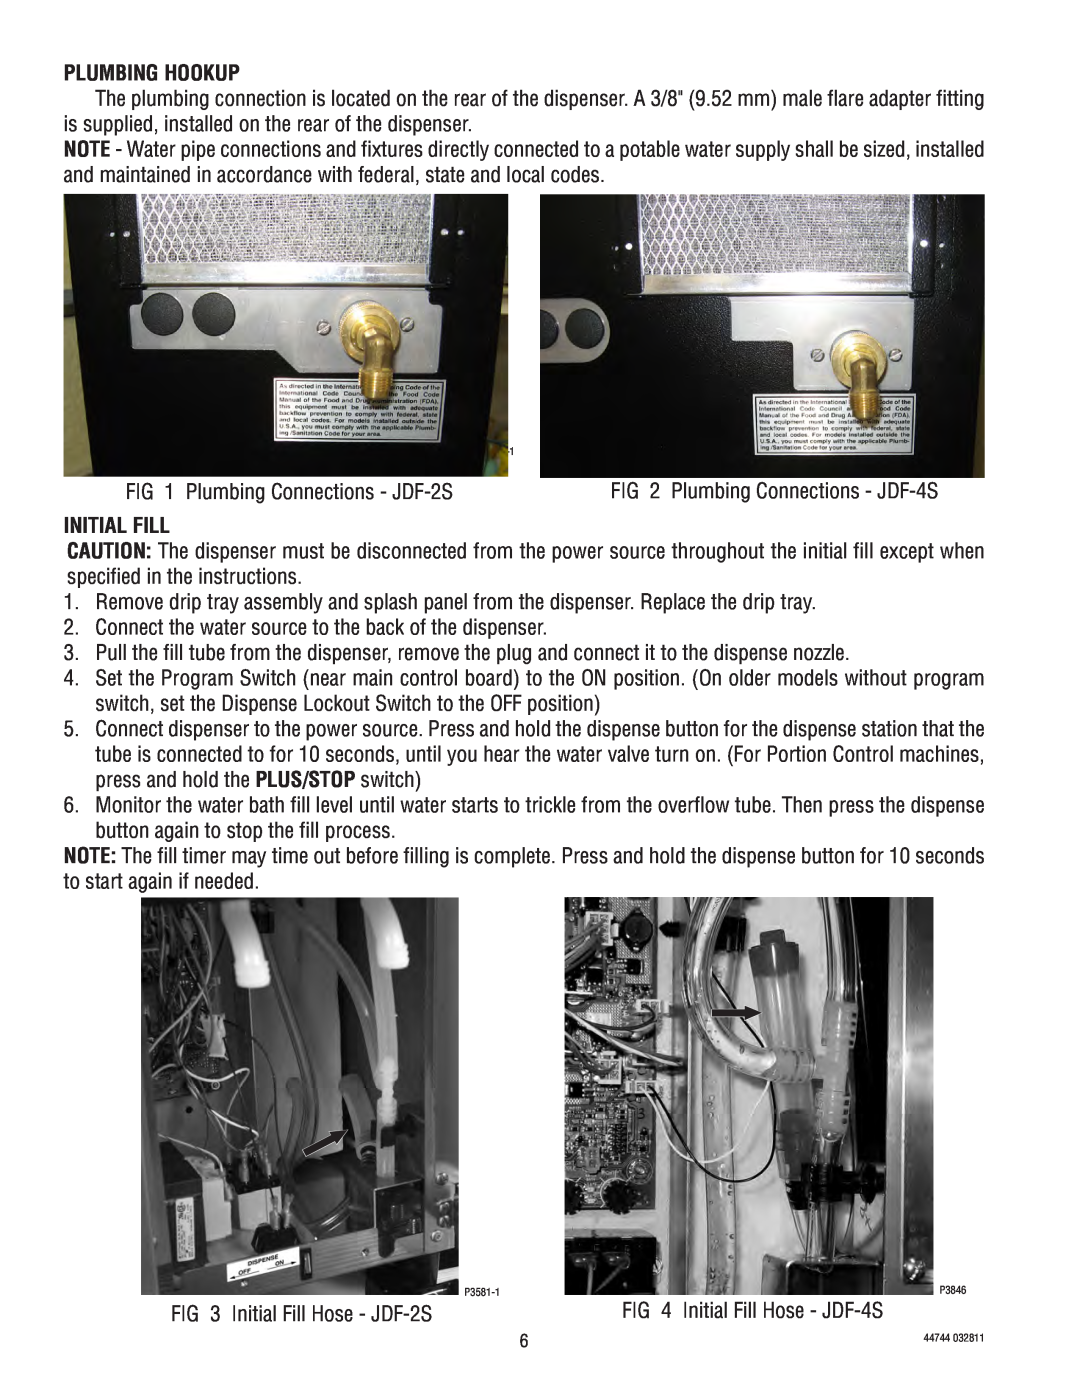 Bunn JDF-4S service manual Plumbing Hookup, Initial Fill 